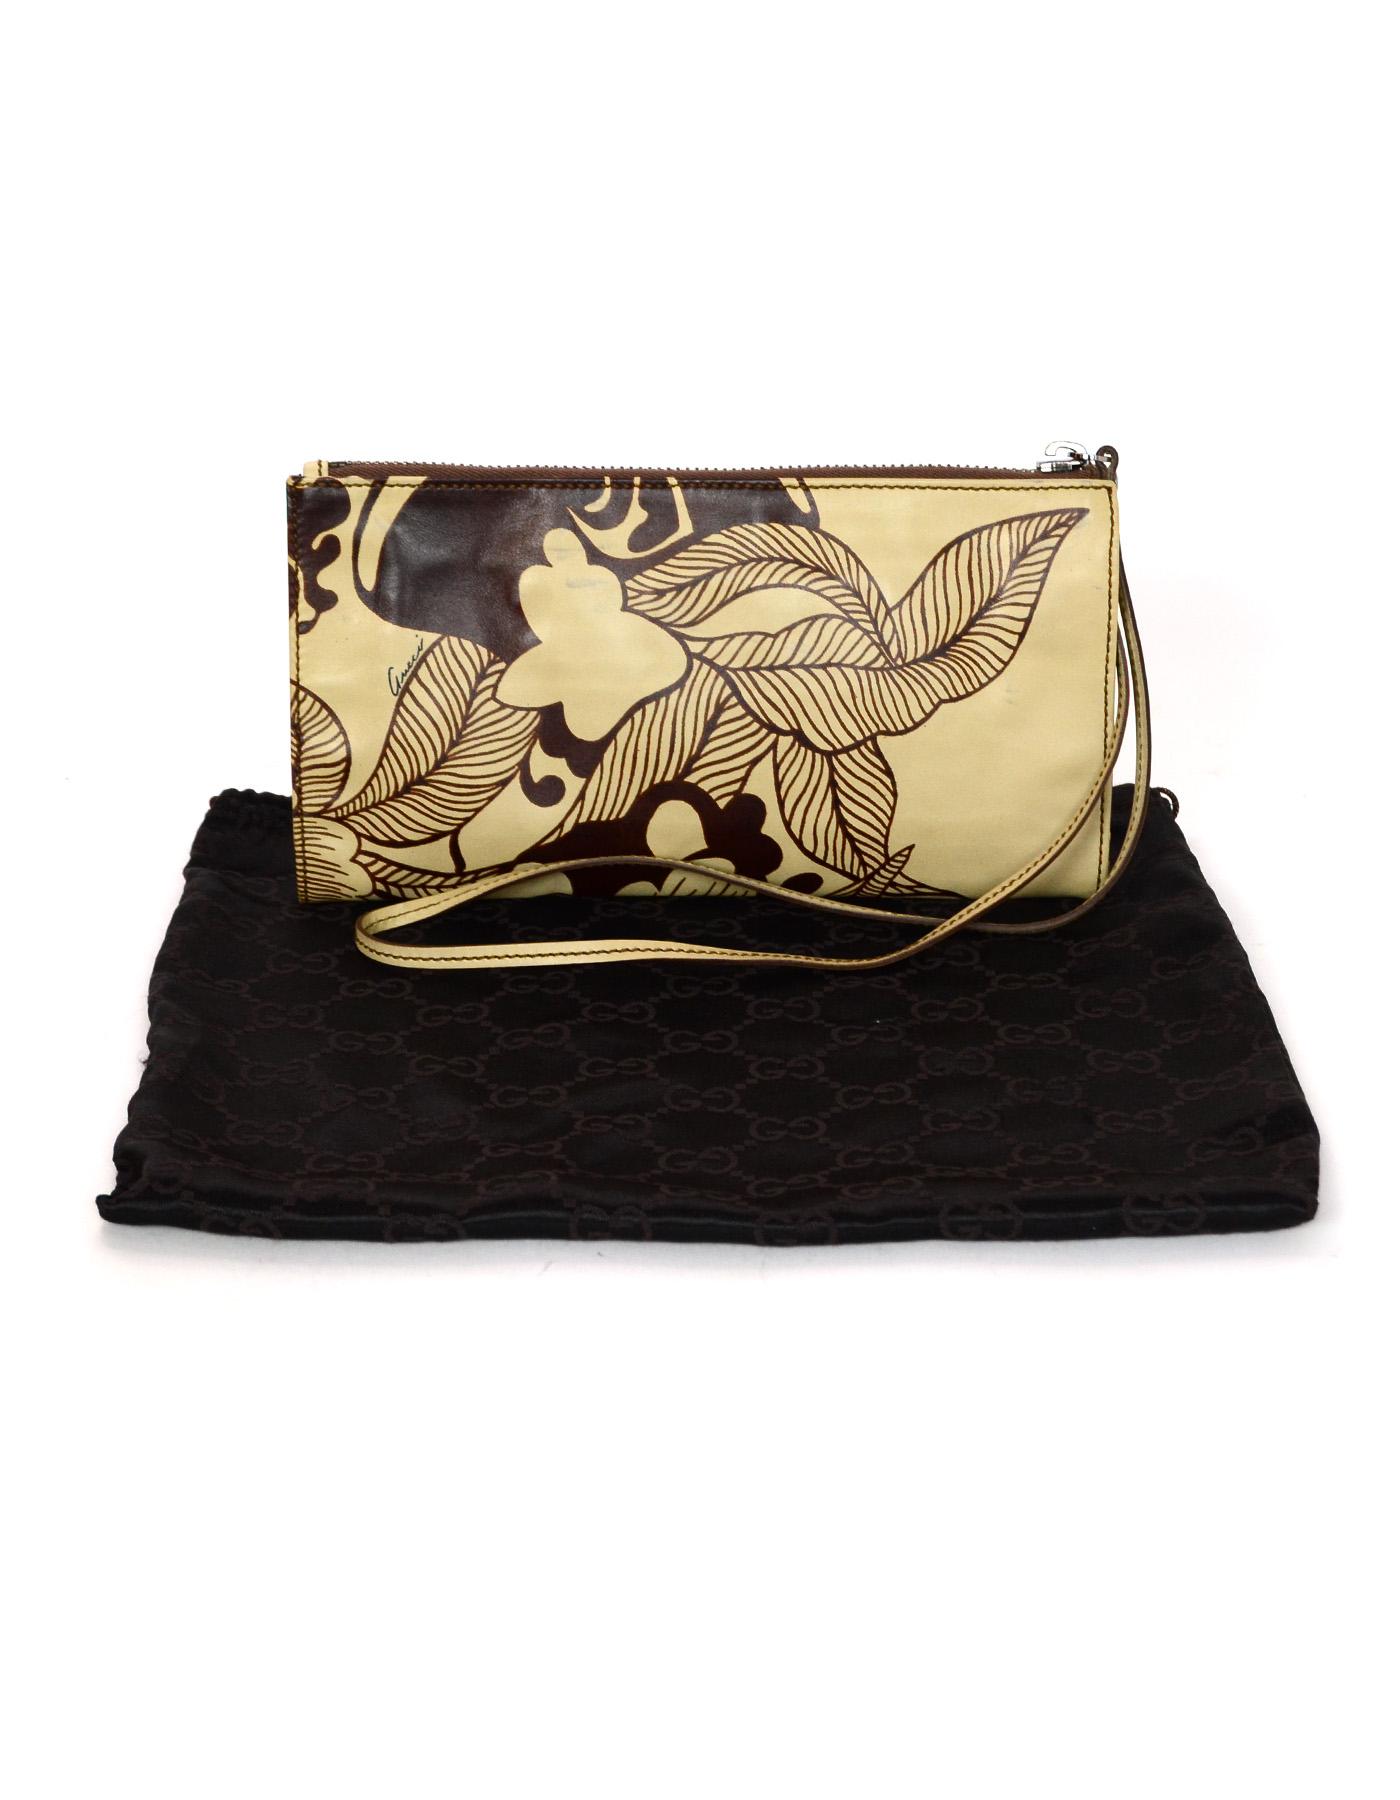 Gucci Tan/Brown Floral Leather Wristlet Bag w/ Dust Bag 1